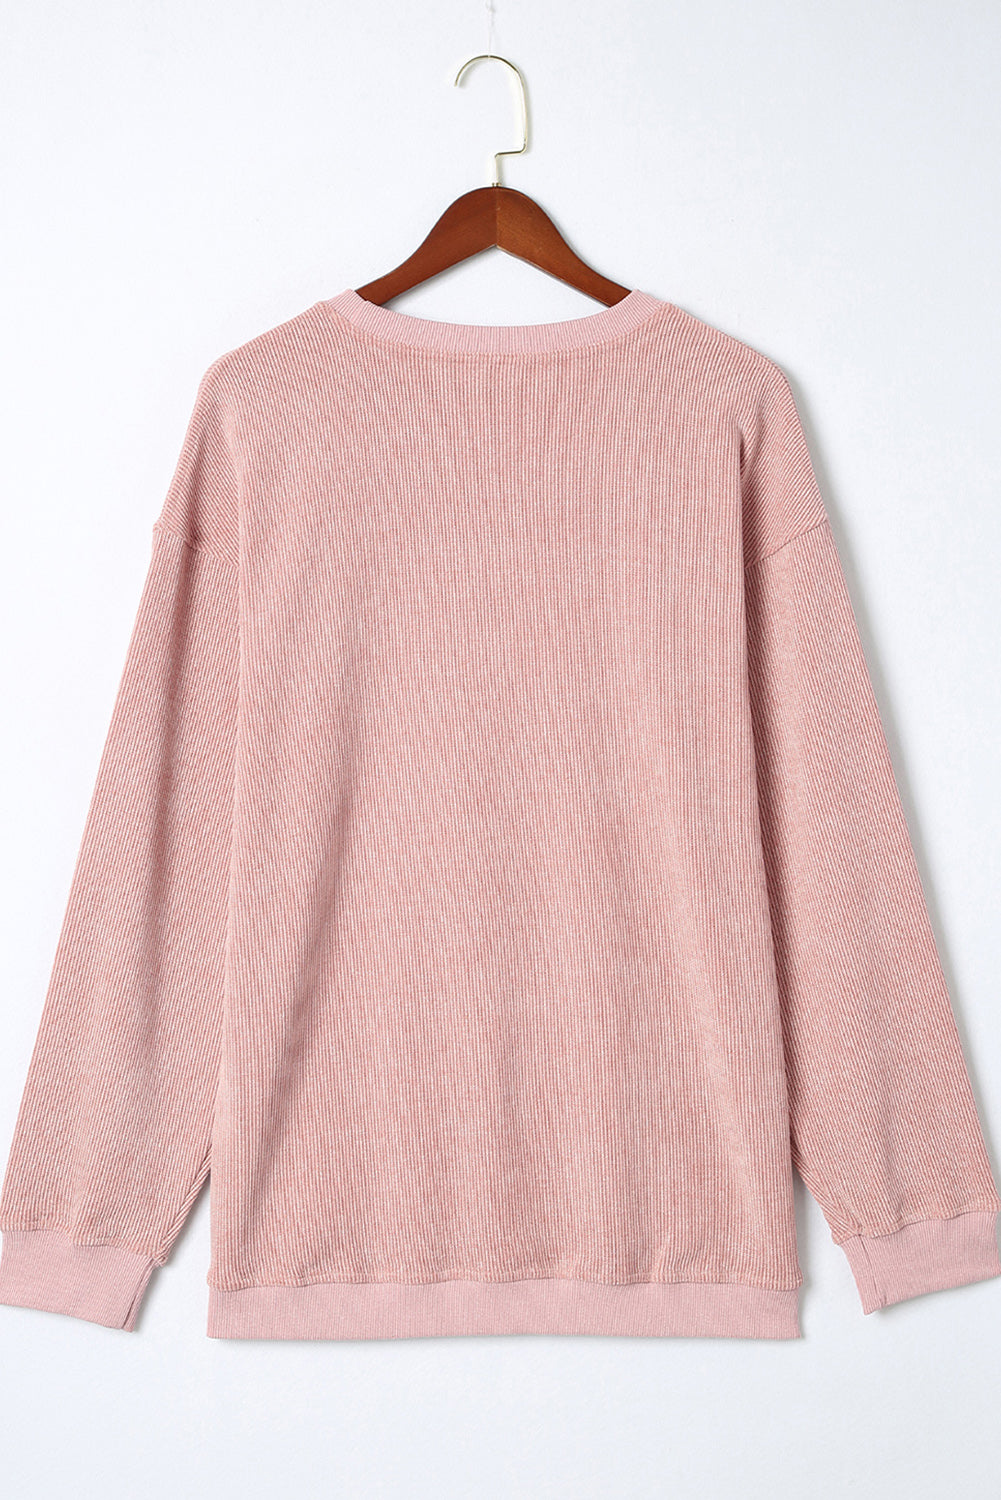 Pink MERRY Christmas Plaid Leopard Print Corded Sweatshirt